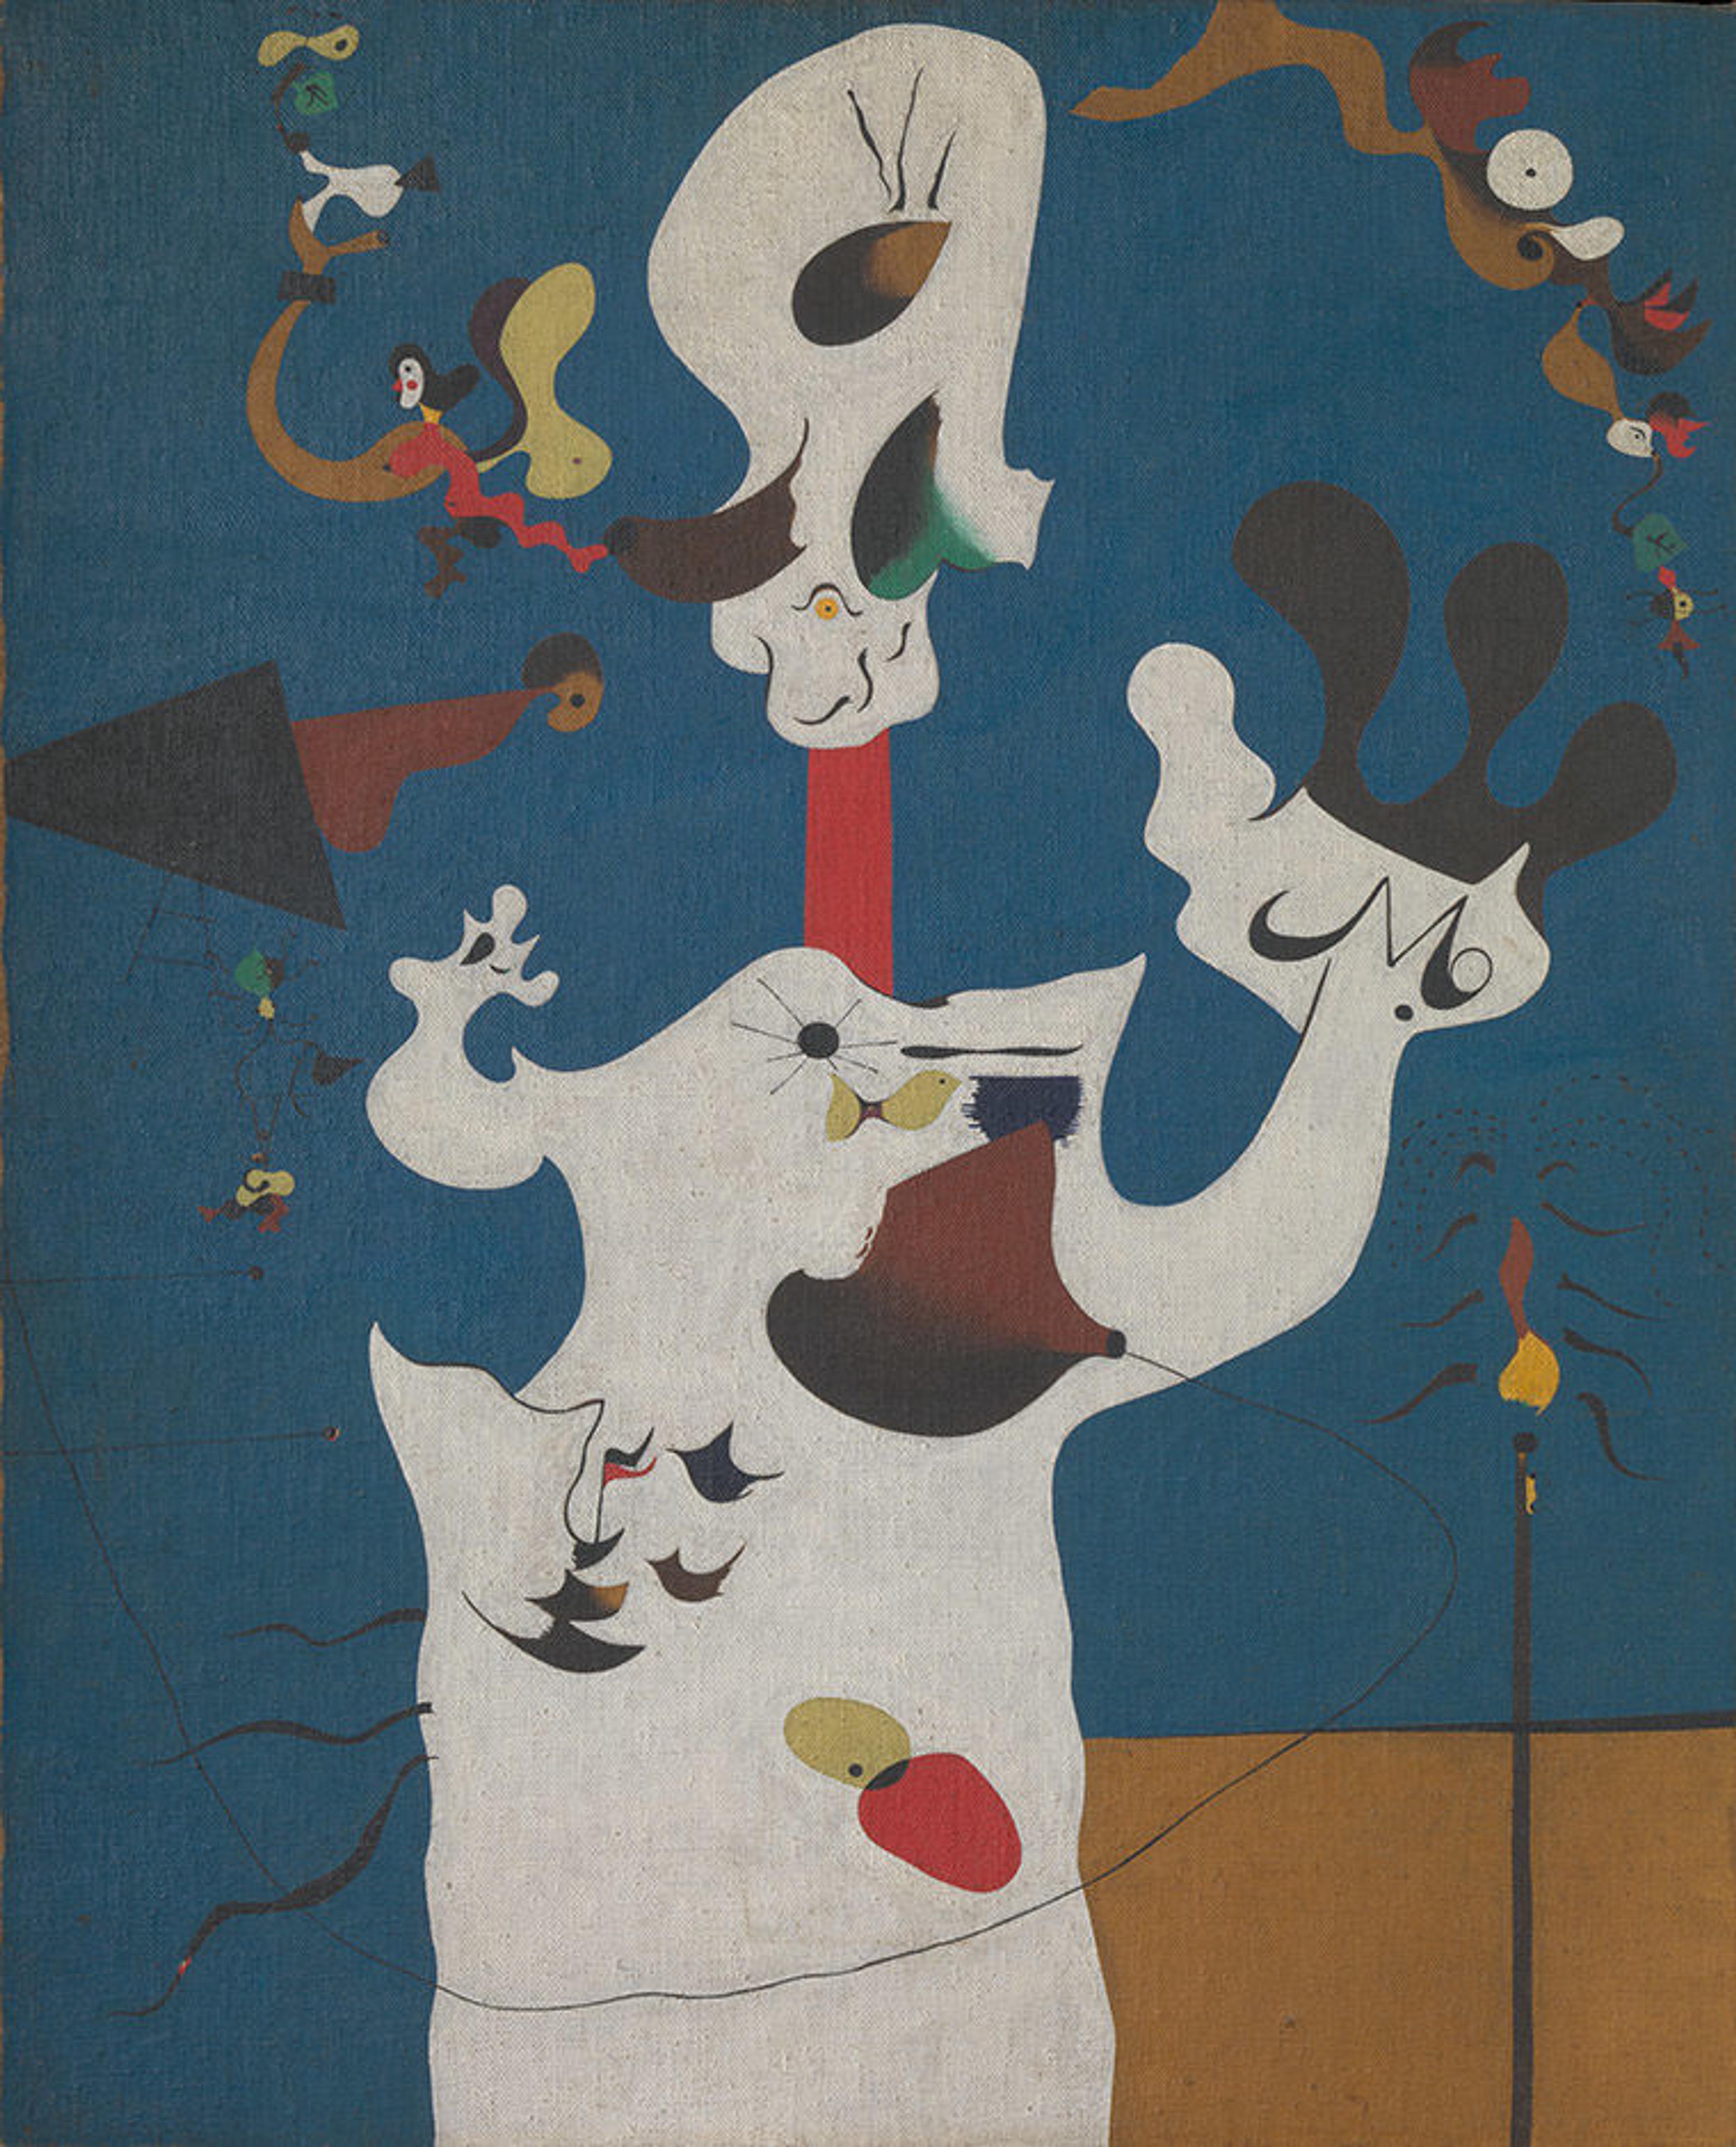 Joan Miró's Potato from 1928